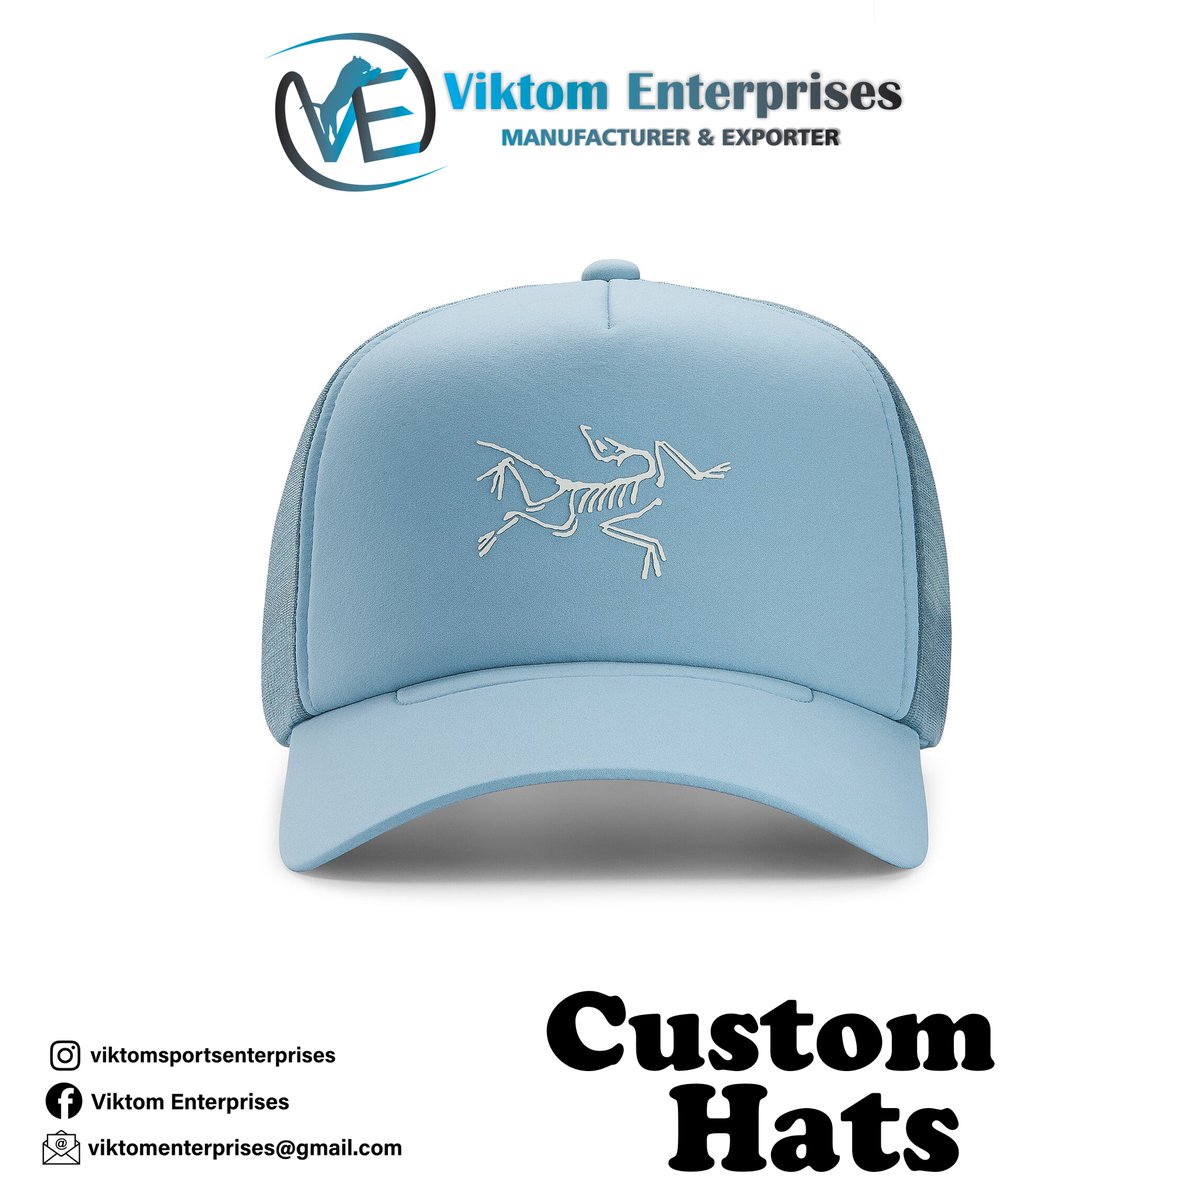 Customized Hat
.
.

.
.

#seattle #mariners #seattlemariners #worldsfair #newera #neweracap #fittedhats #fitted #fittedcap #fittedhat #myfitteds #fashion #hat #hatclub #tymathis #chicago #hat #hats #drip #viktomenterprises #cap #germany #spain #losangeles